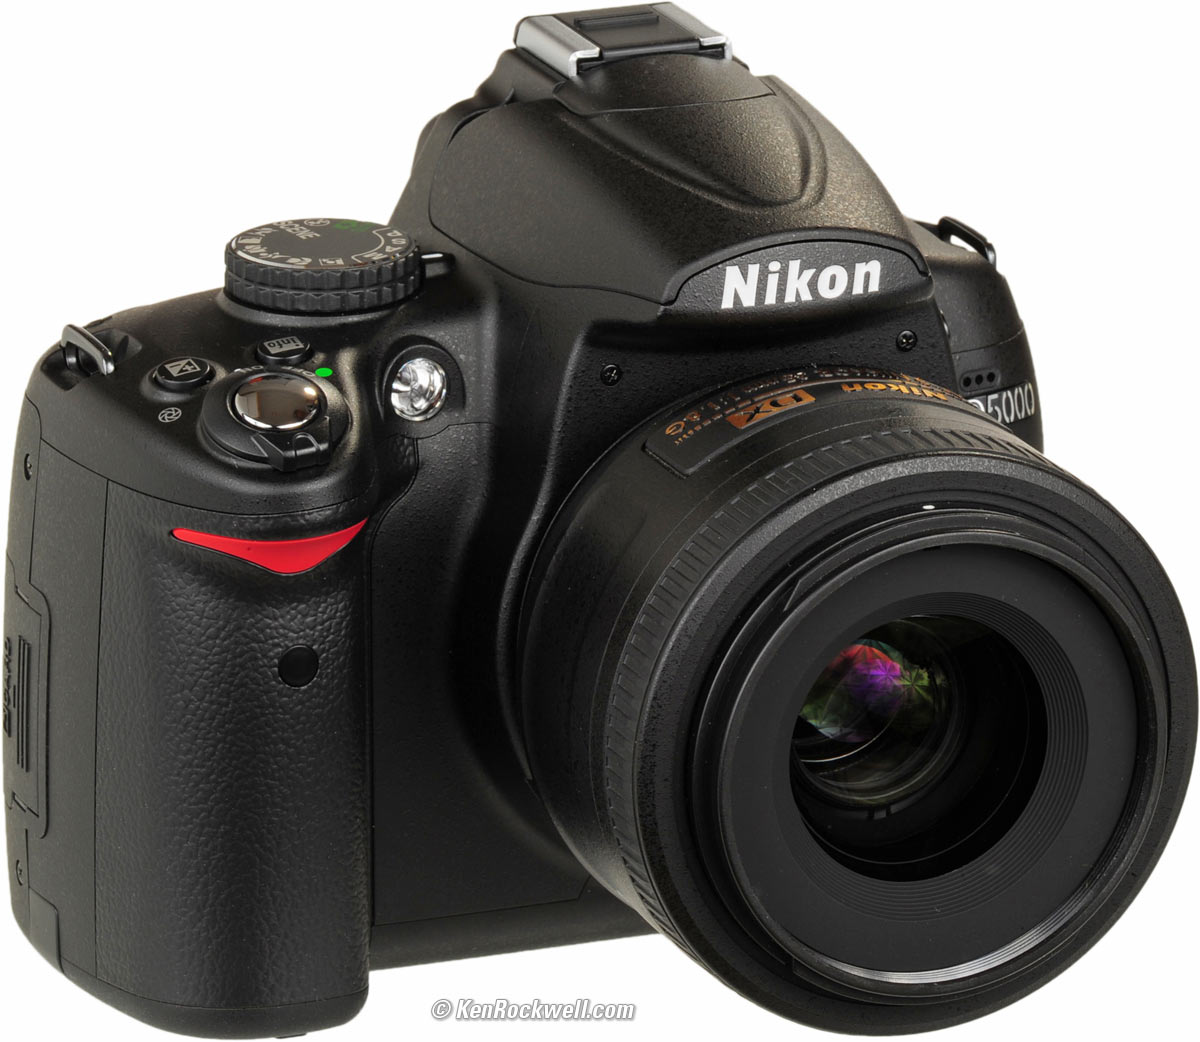 Nikon D5000 User's Guide